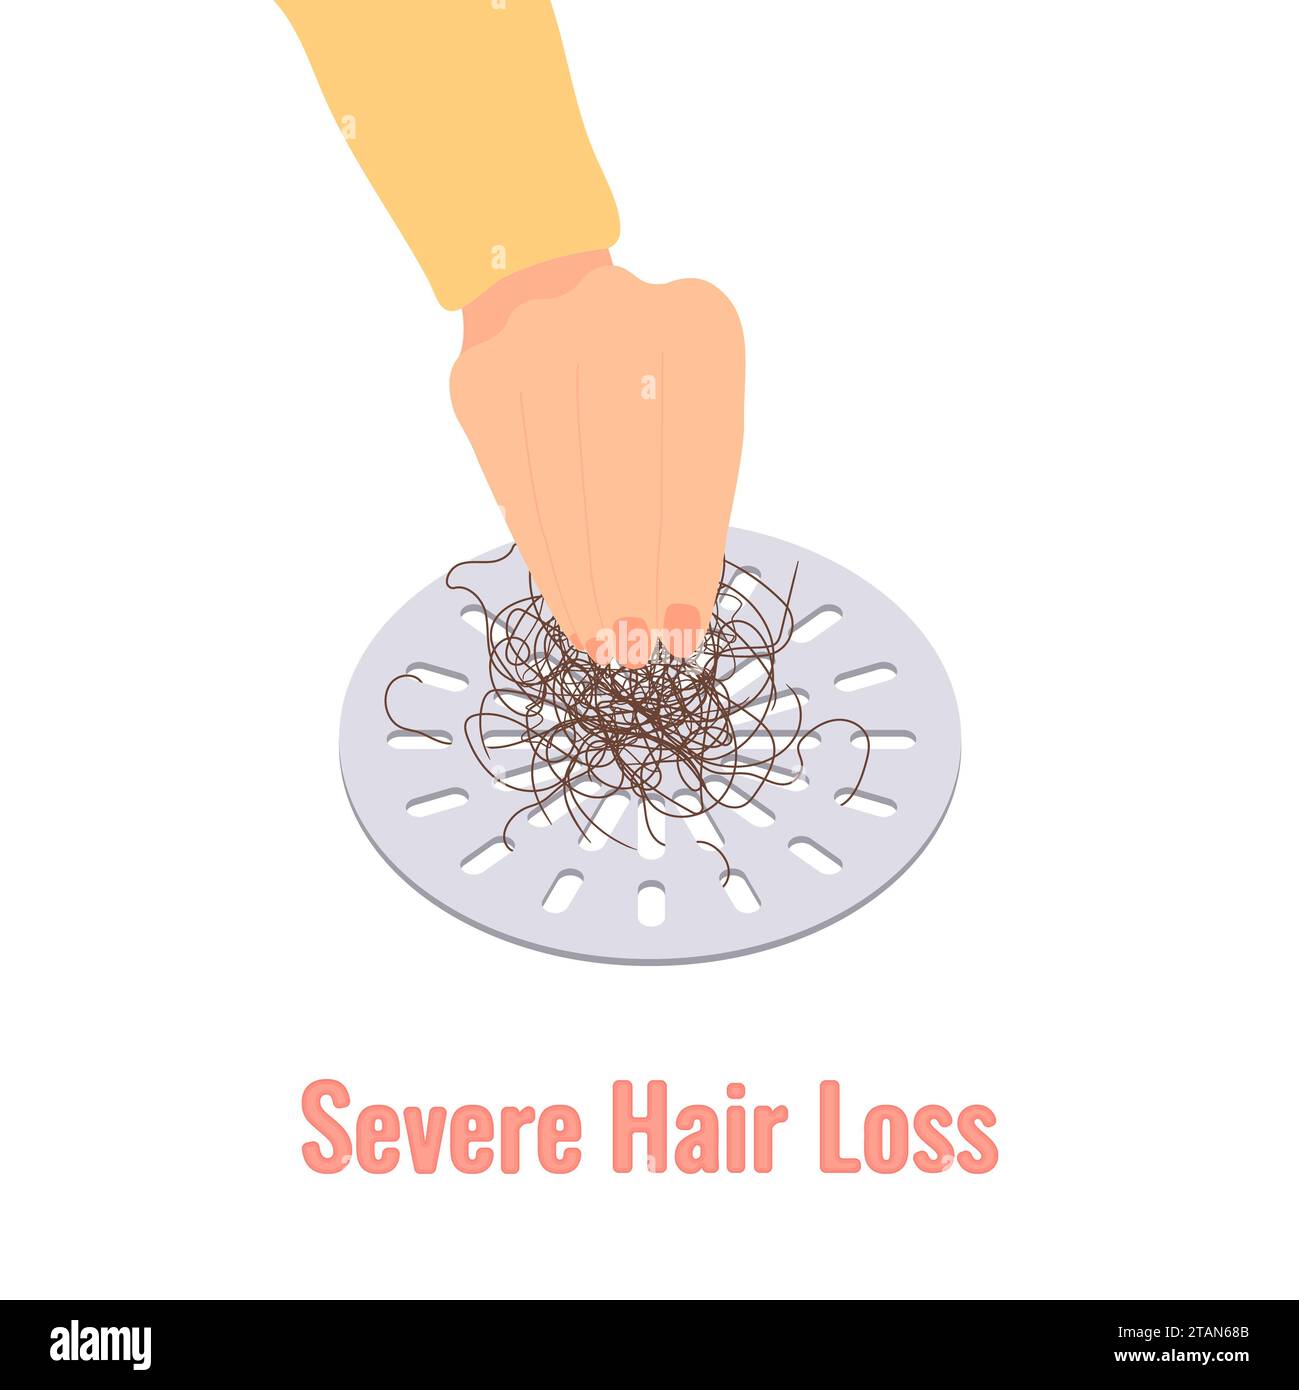 Severe hair loss, conceptual illustration Stock Photo